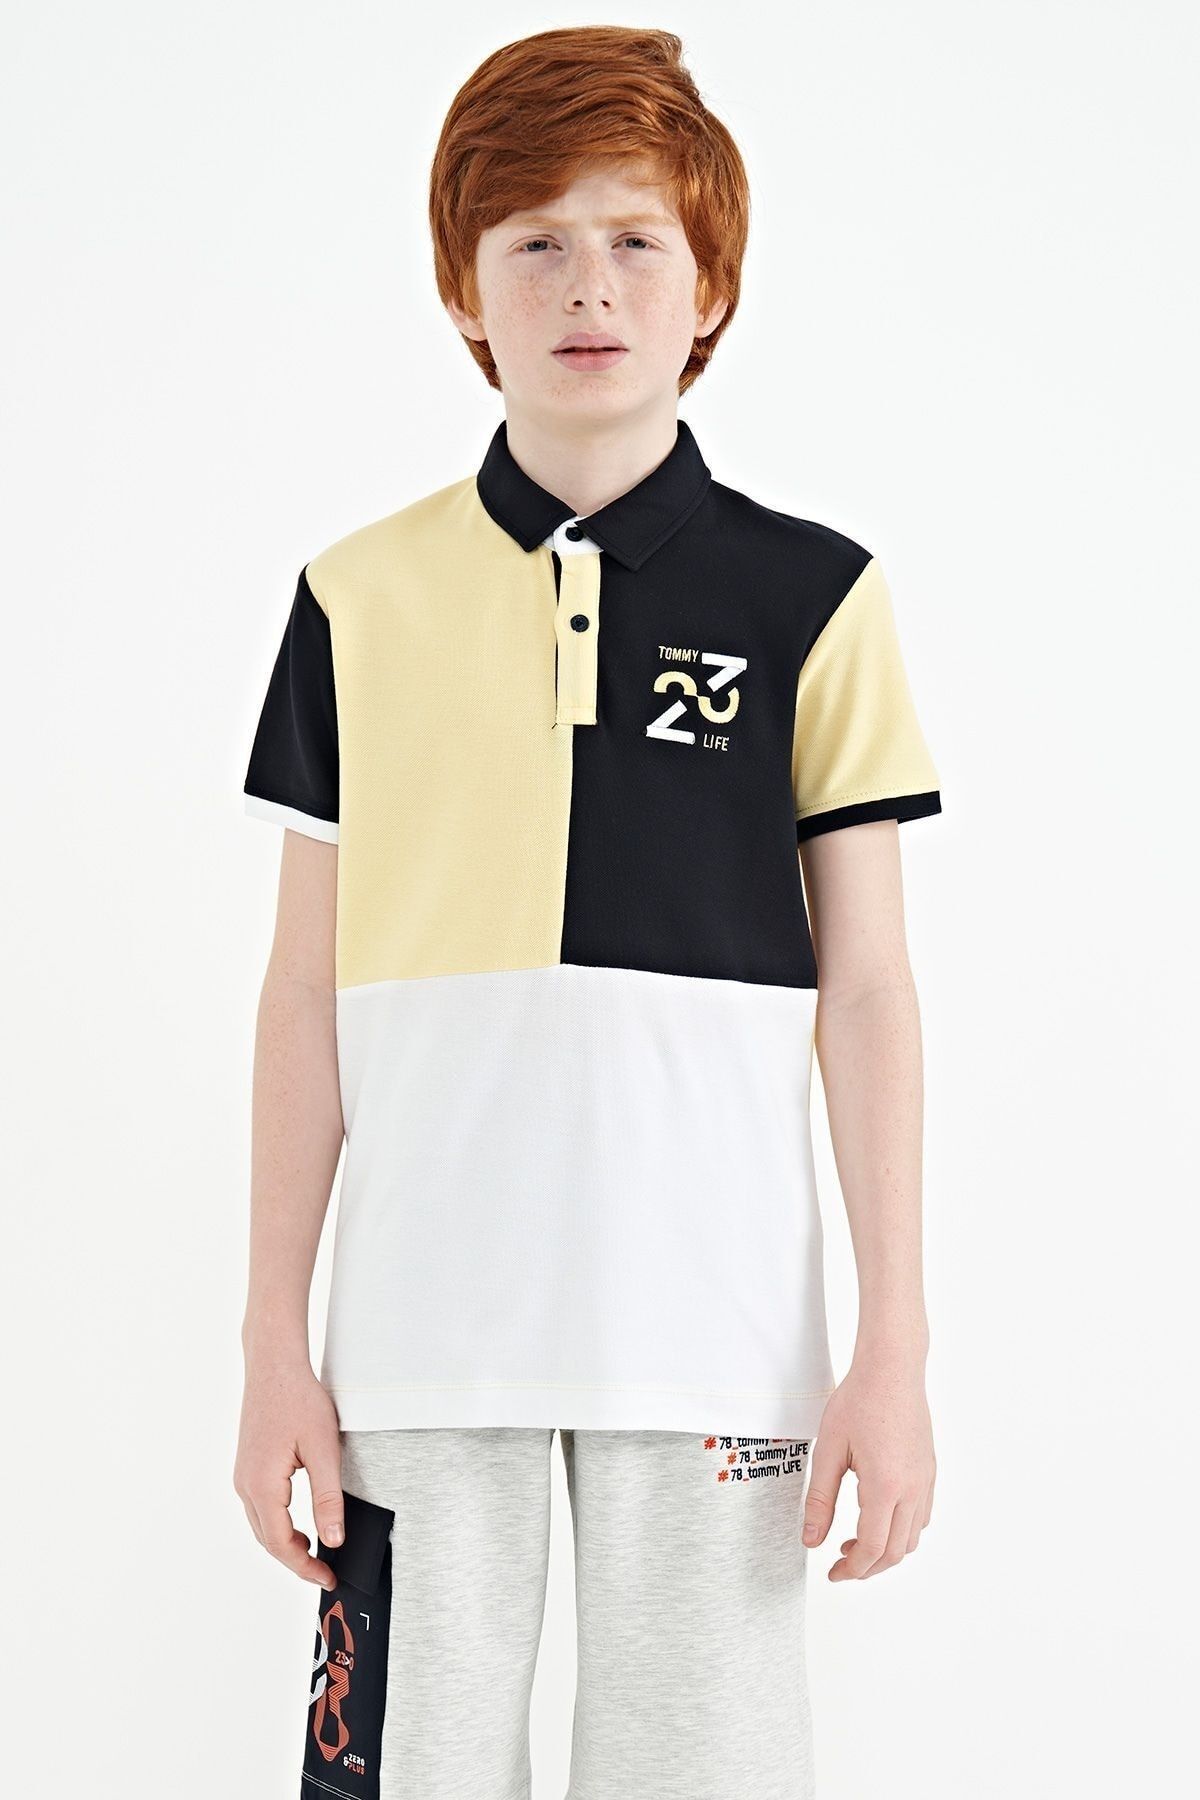 TOMMY LIFE Lacivert Renk Bloklu Nakış Detaylı Standart Kalıp Polo Yaka Erkek Çocuk T-shirt - 11108